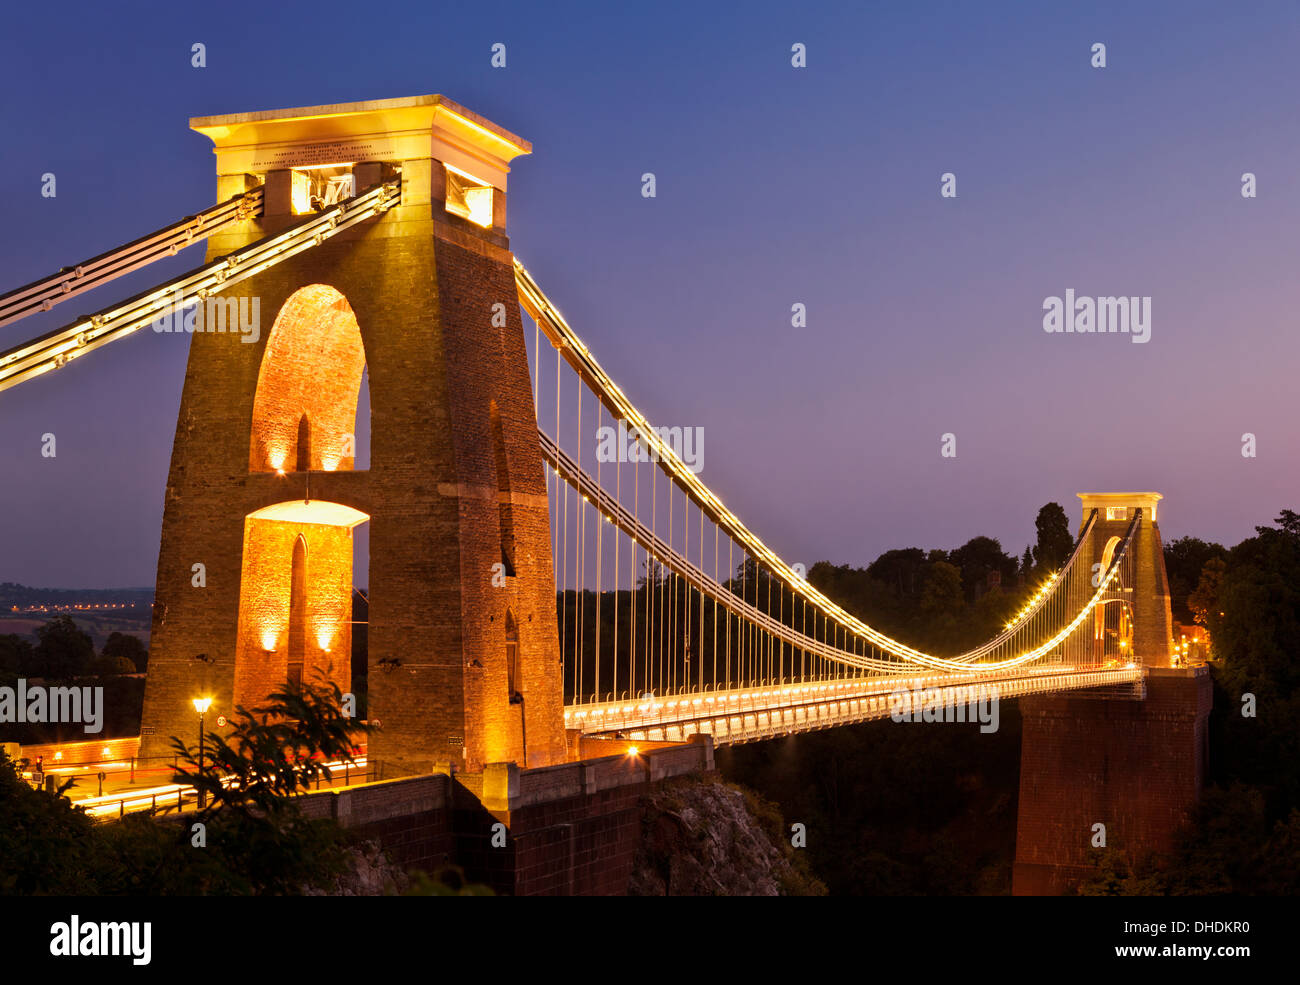 Clifton suspension bridge illuminated at night sunset clifton downs Bristol Avon England UK GB Europe Stock Photo